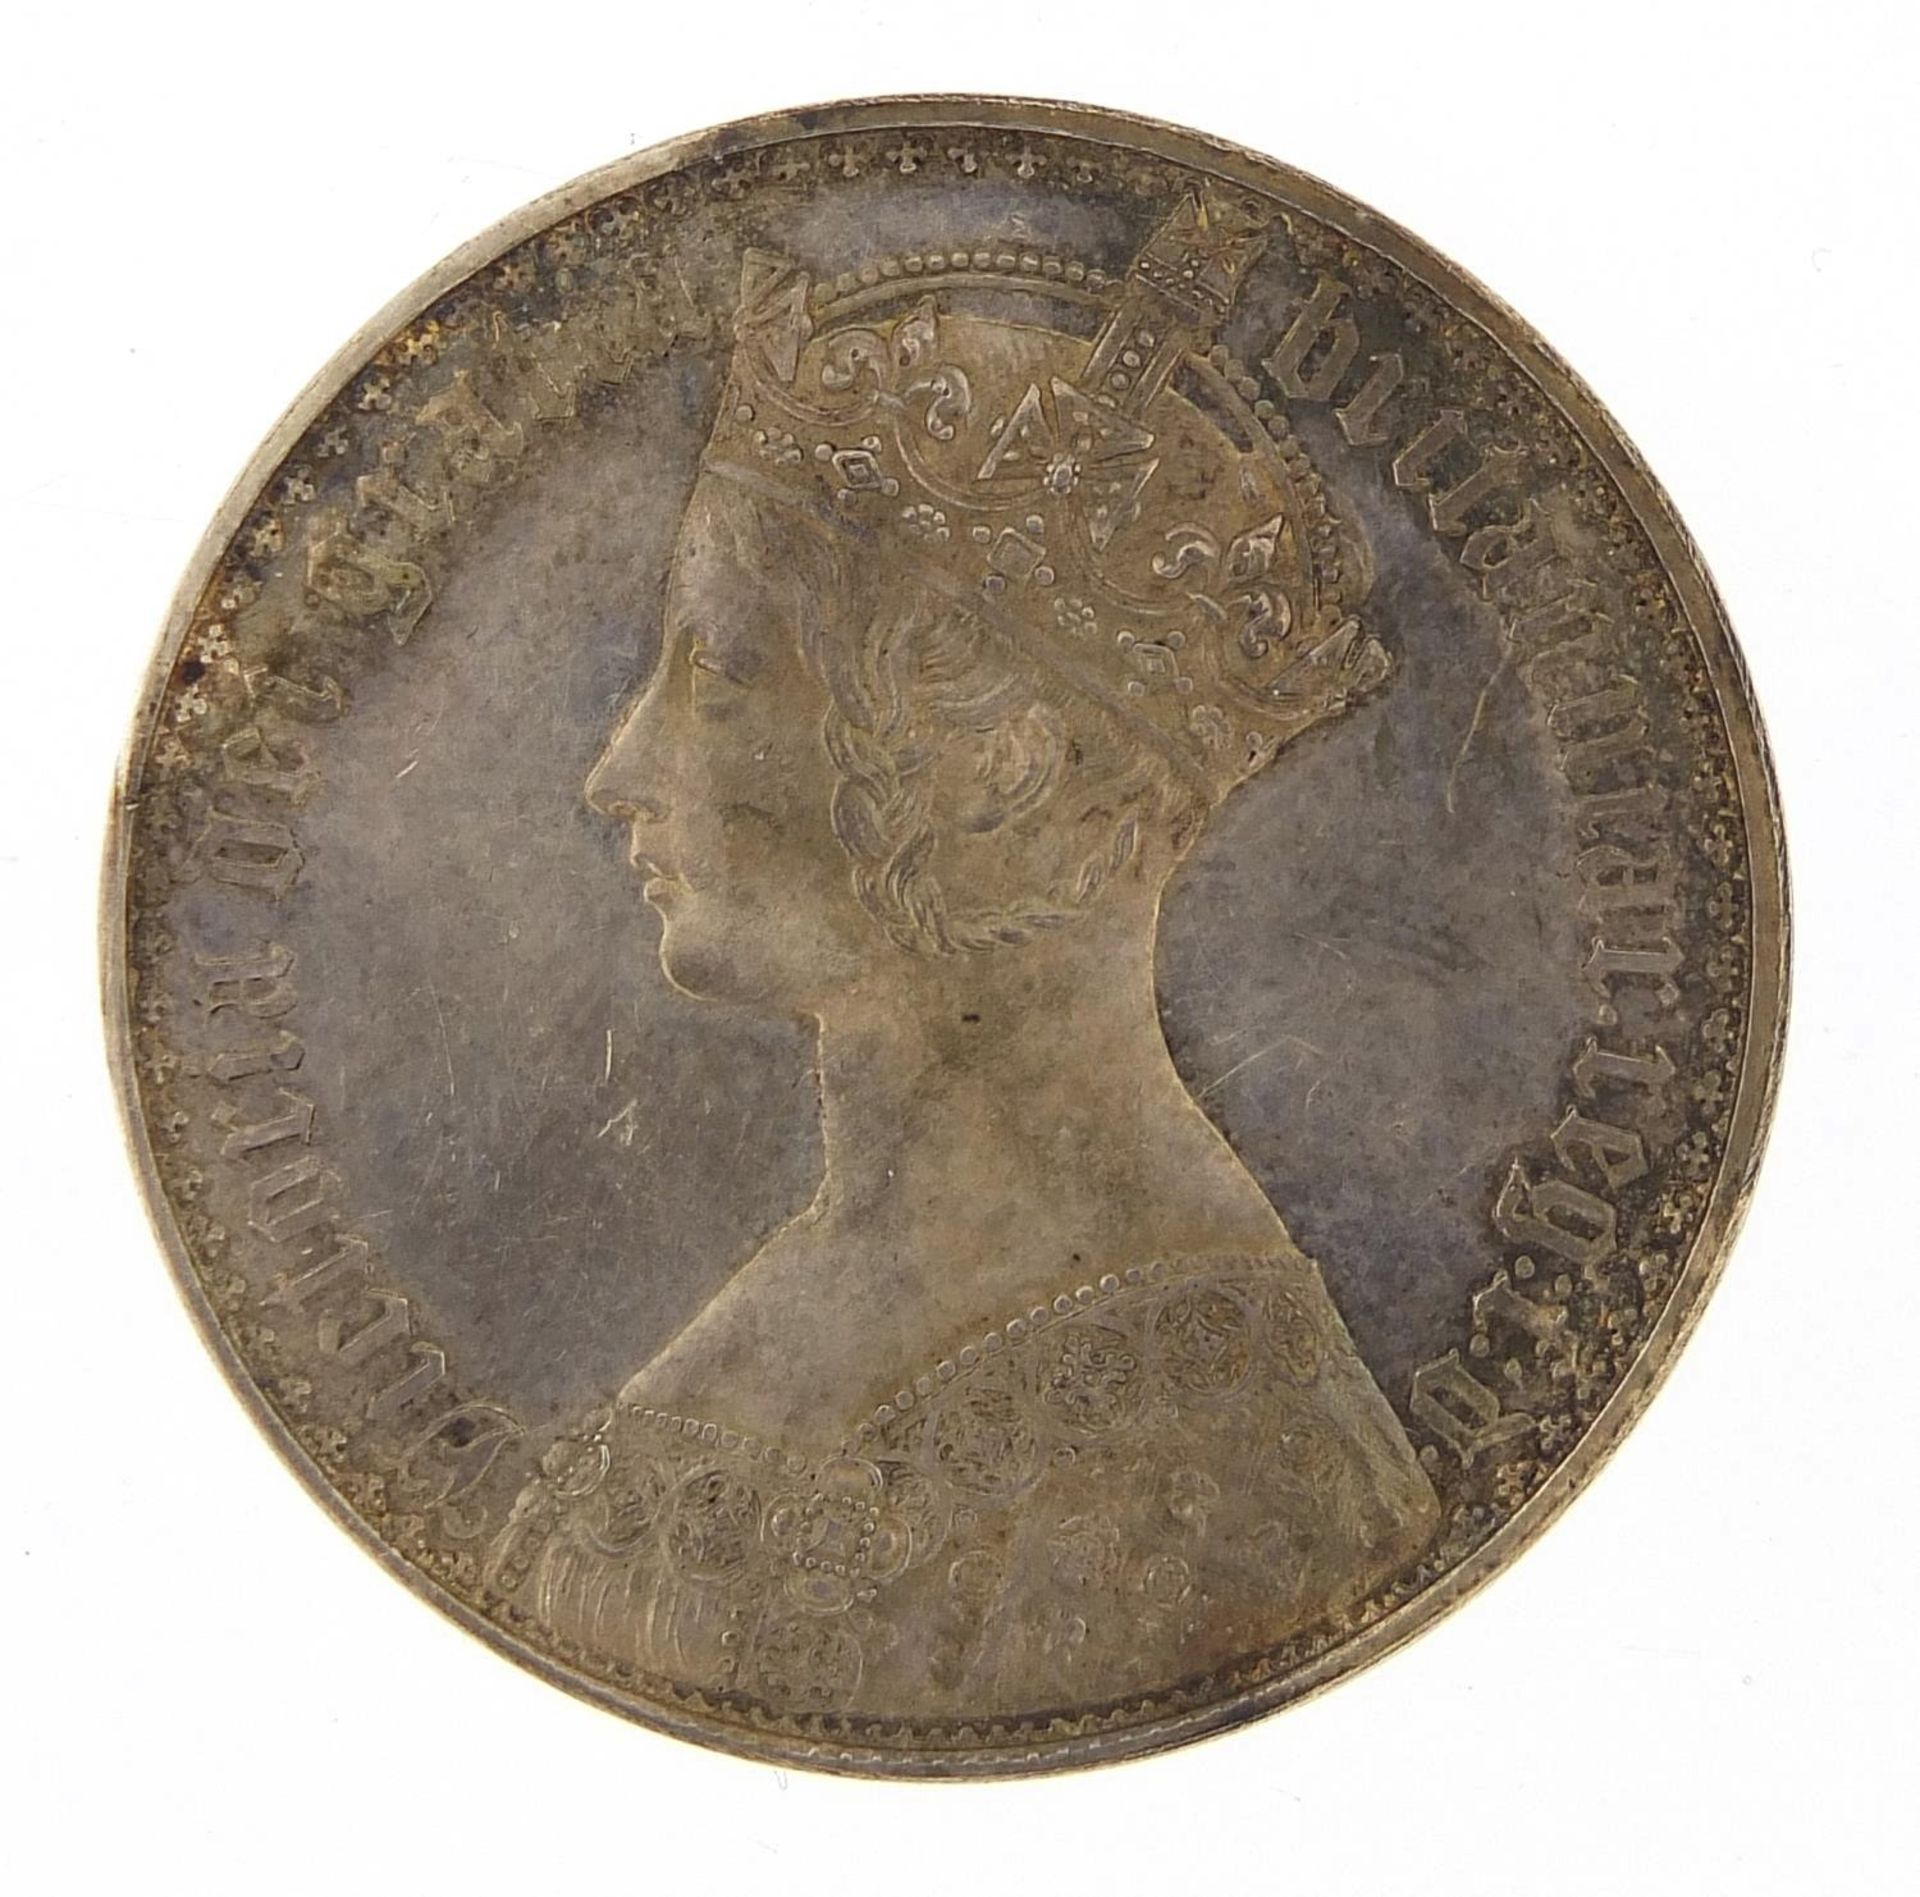 Queen Victoria 1847 Gothic crown, 39mm in diameter, 27.8g - Image 2 of 3